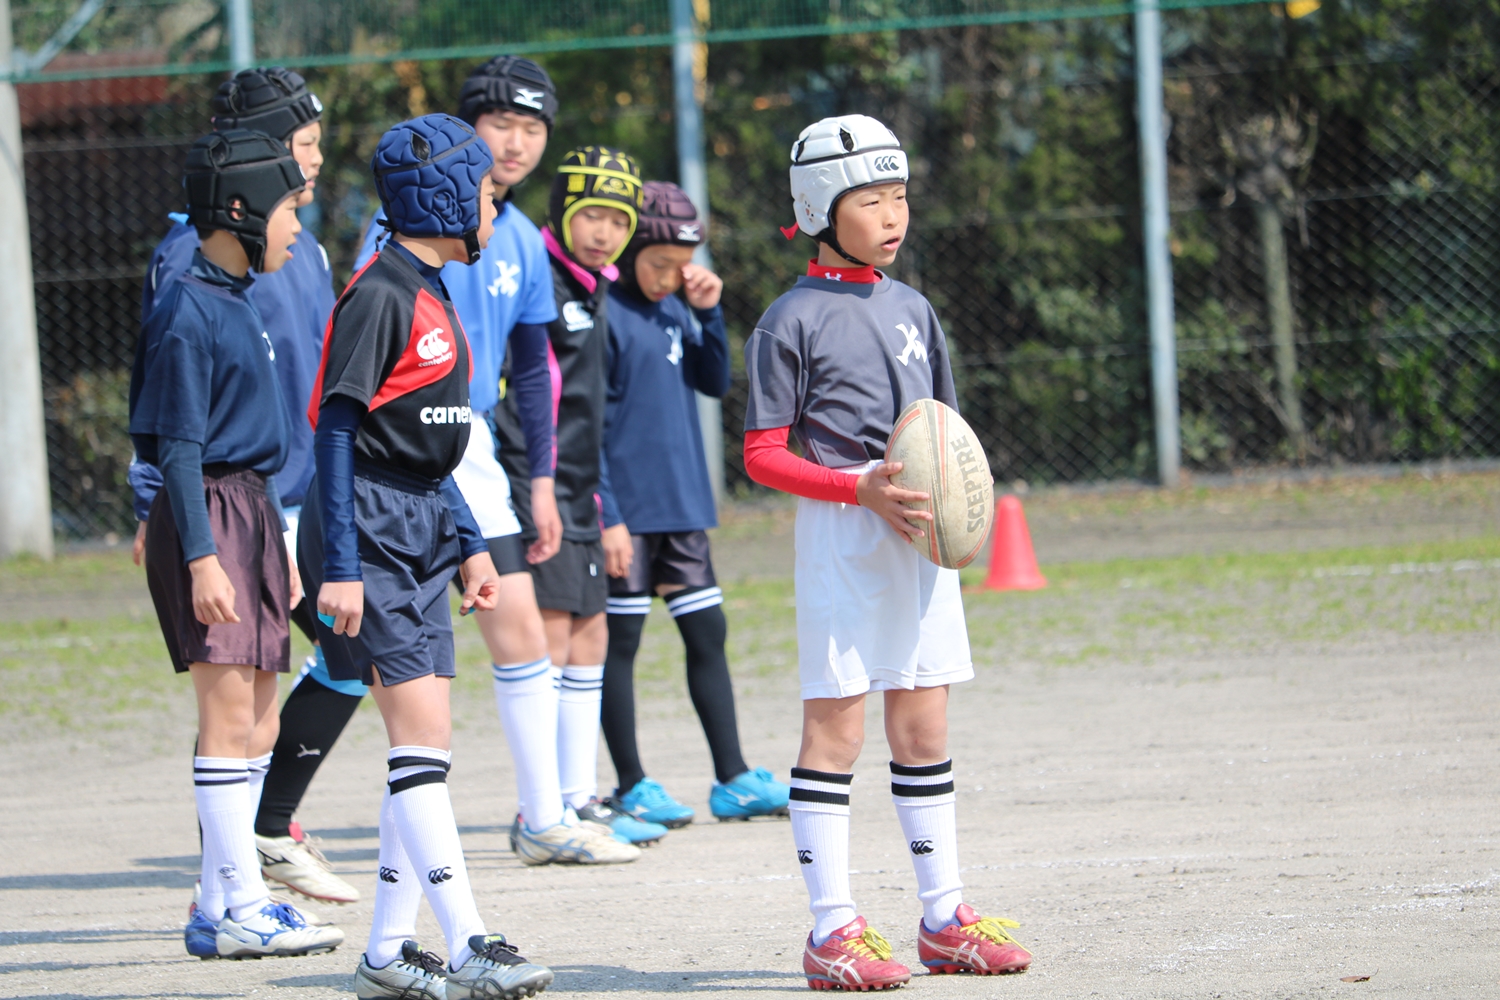 youngwave_kitakyusyu_rugby_school_soukoukai2016049.JPG